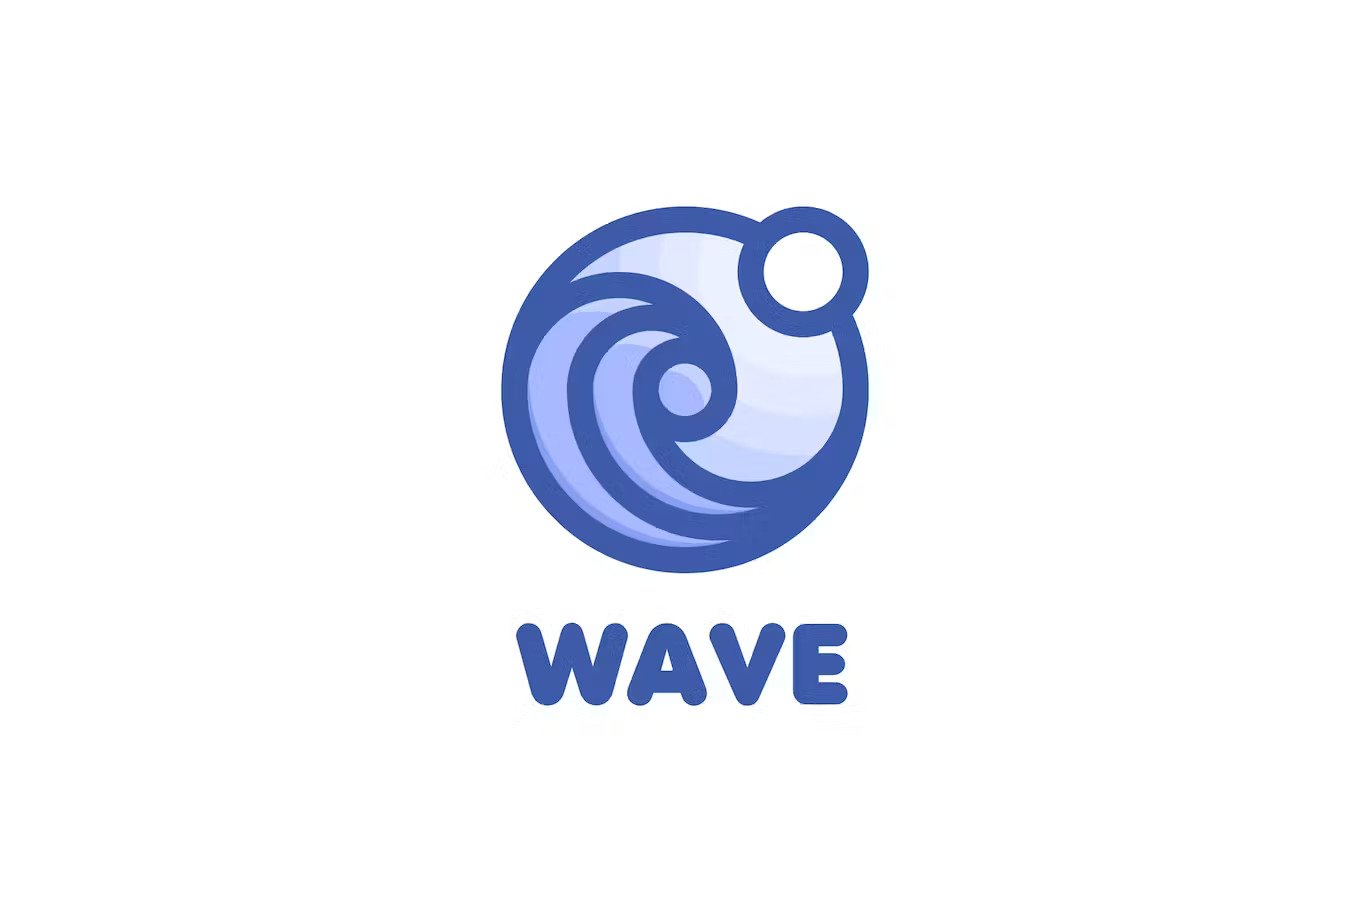 A wave logo in blue